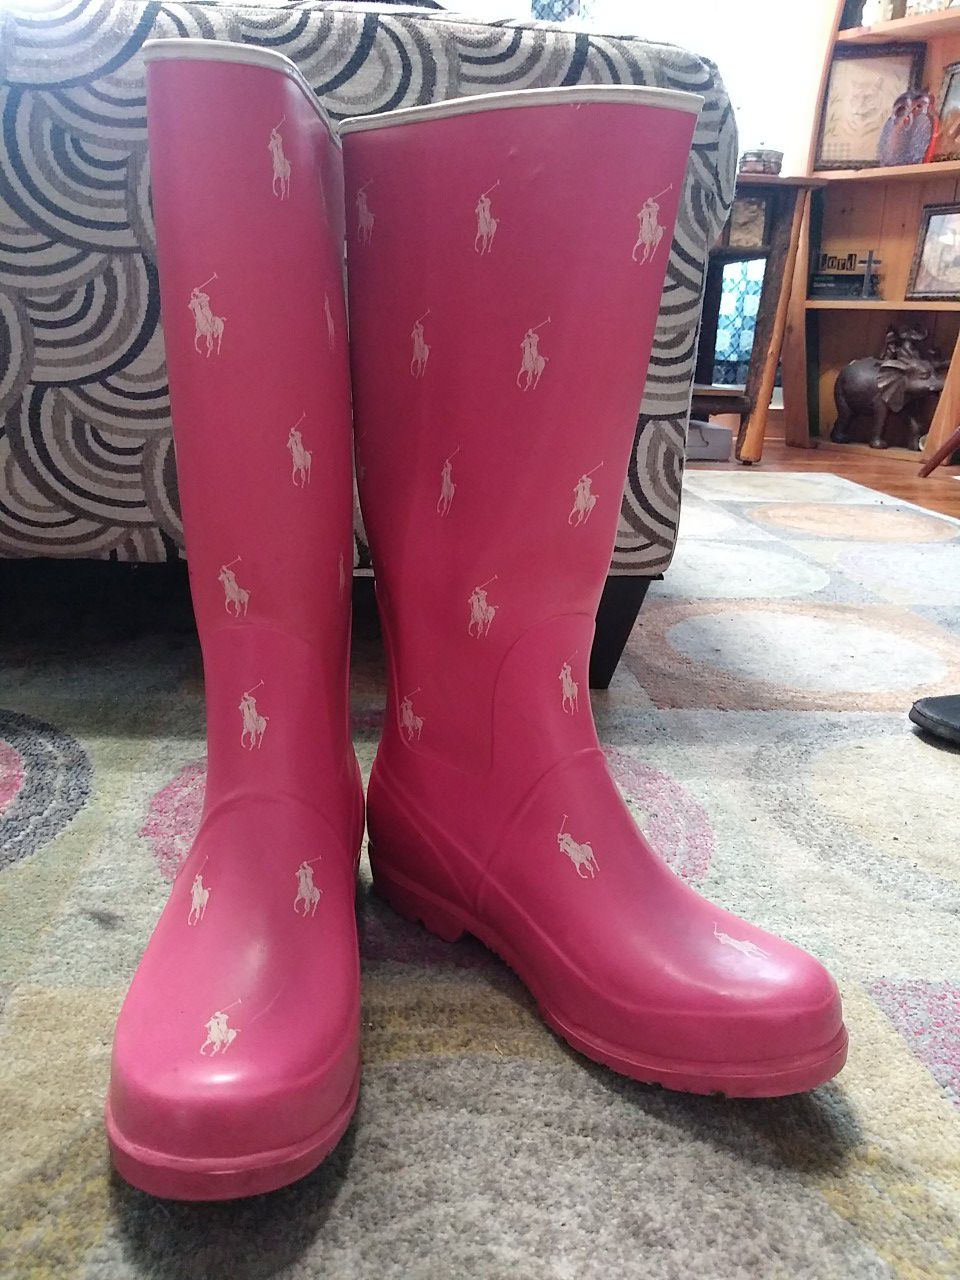 Polo rain boots